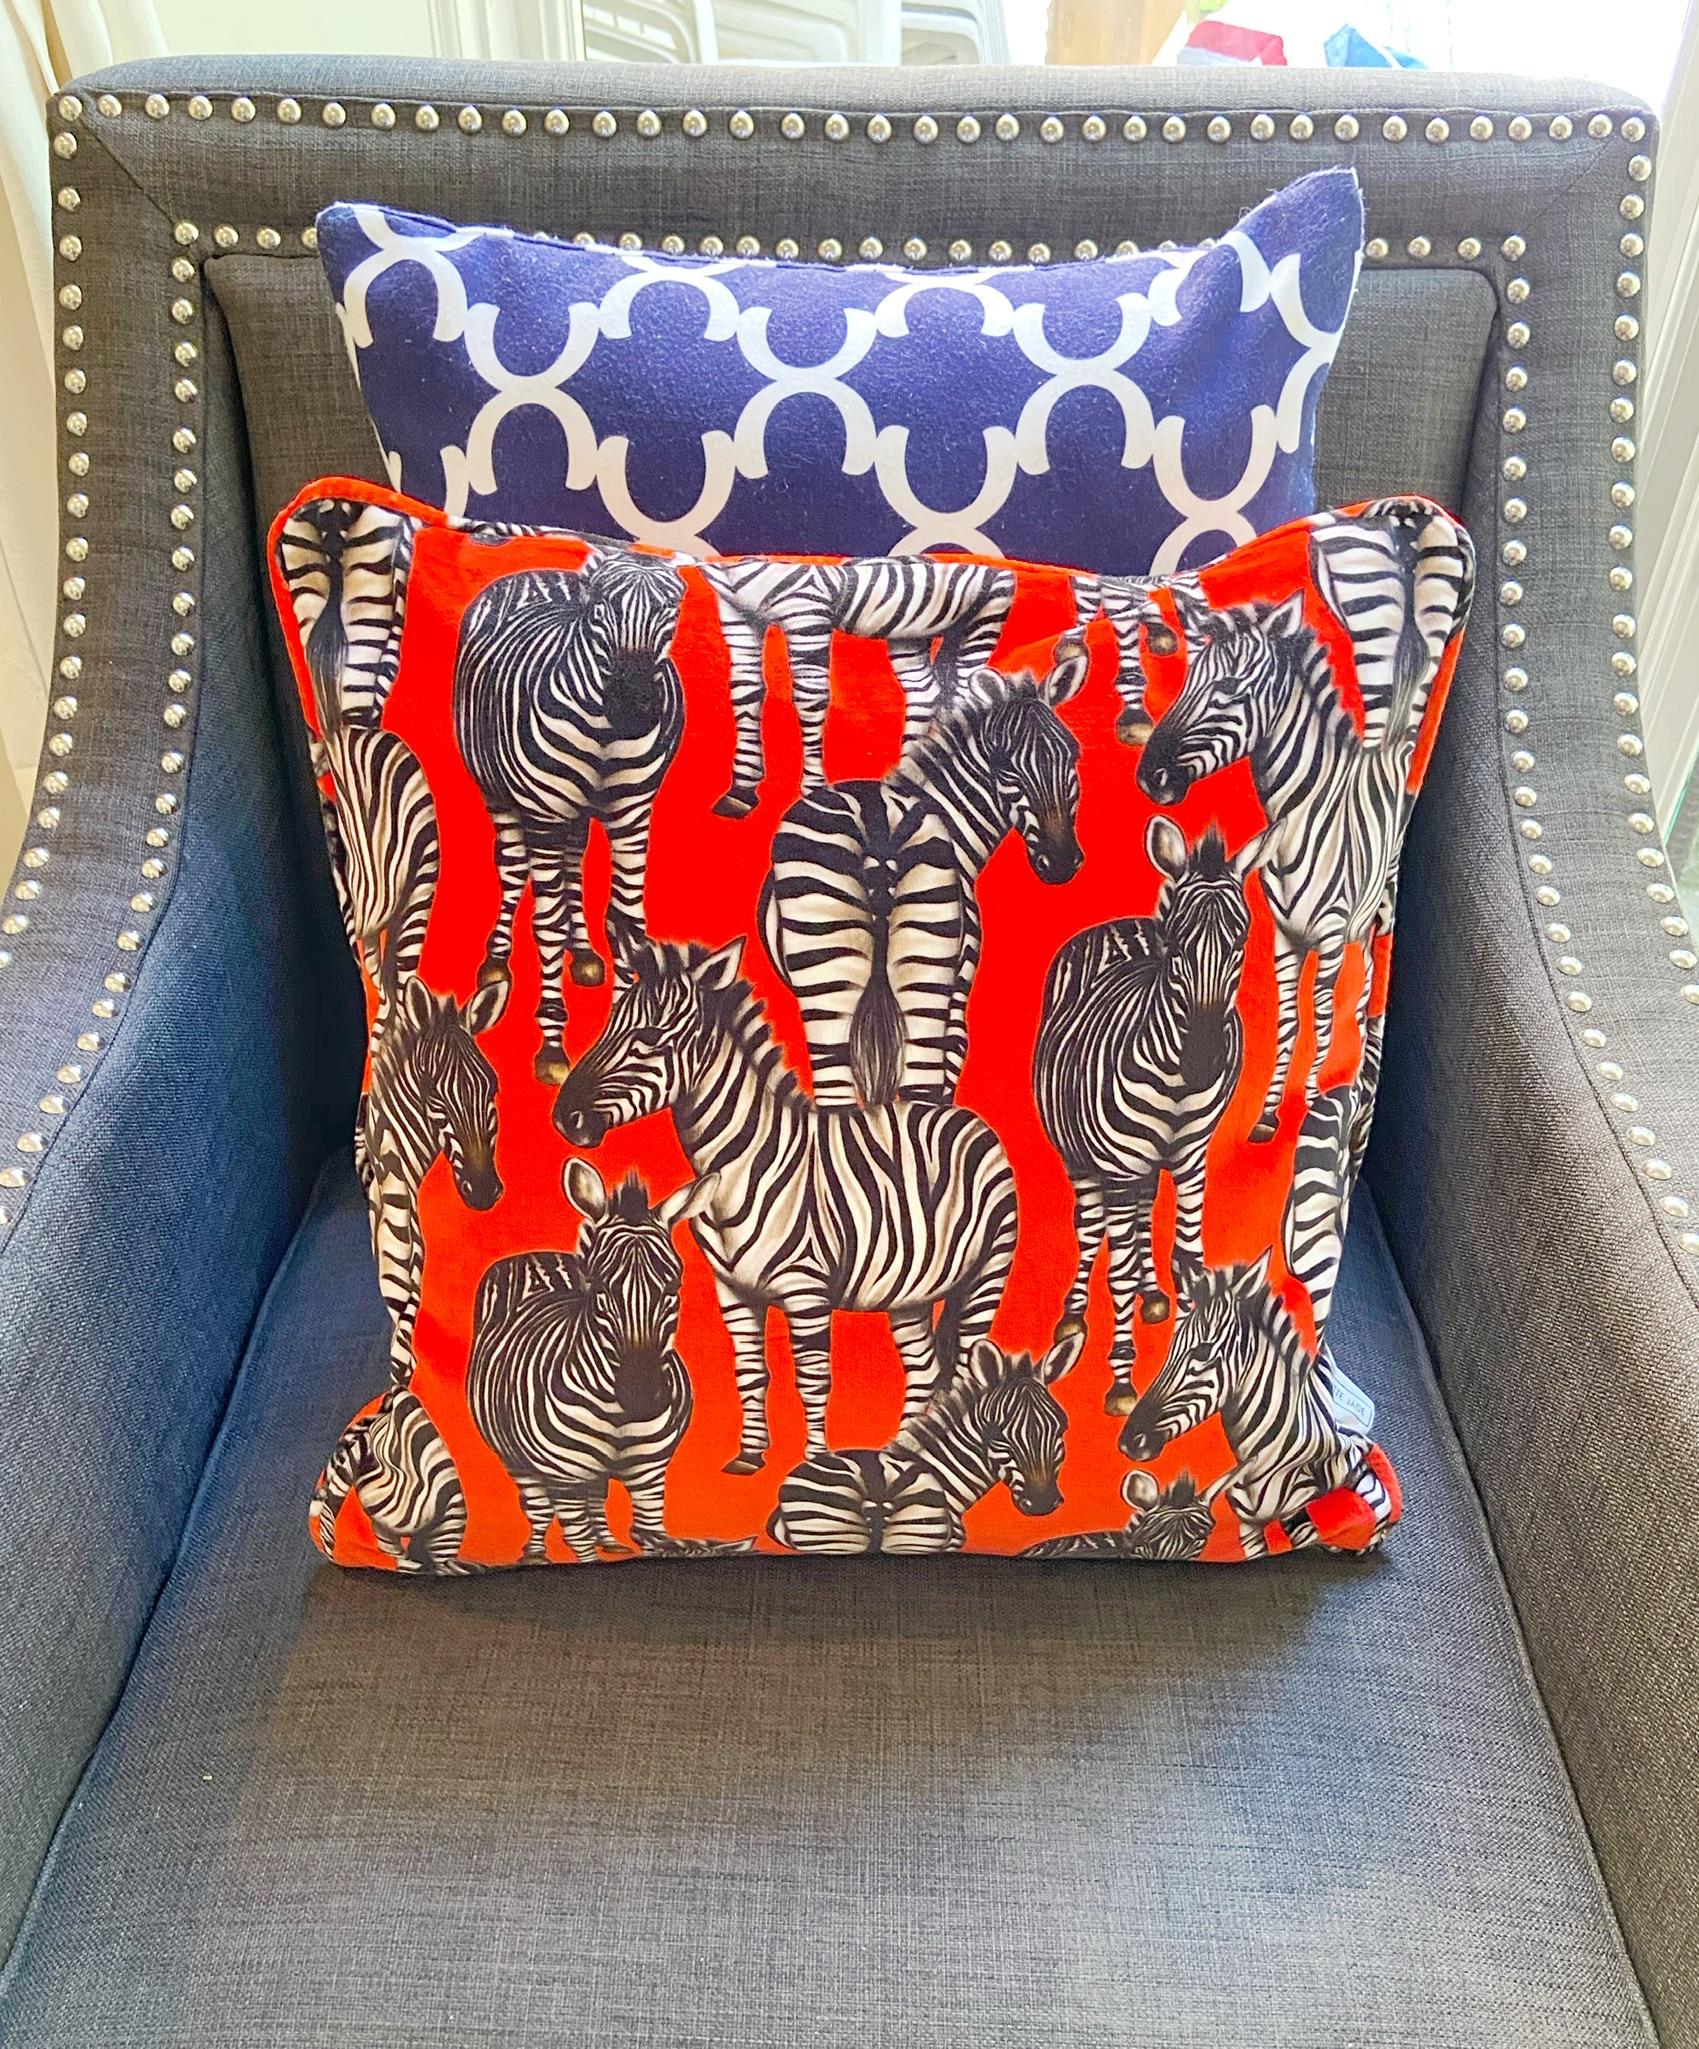 British Red Velvet Cushion Cover with Hand-Drawn Zebra Image Pillow